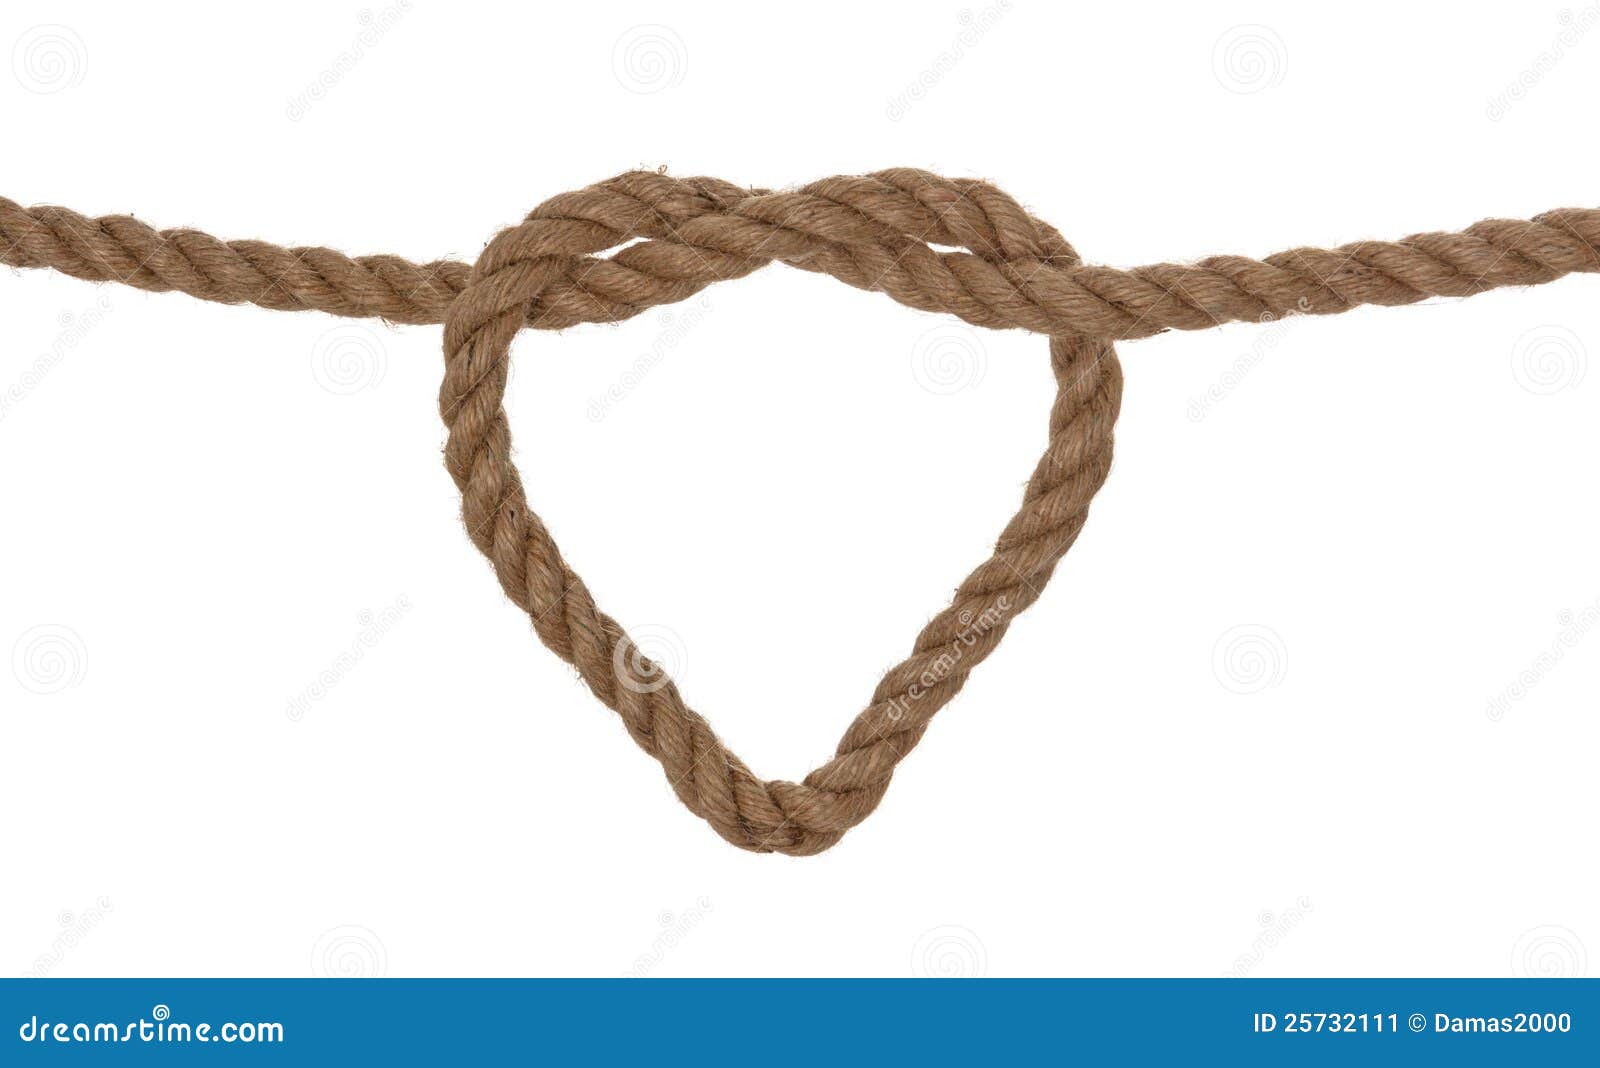 clipart heart knot - photo #16